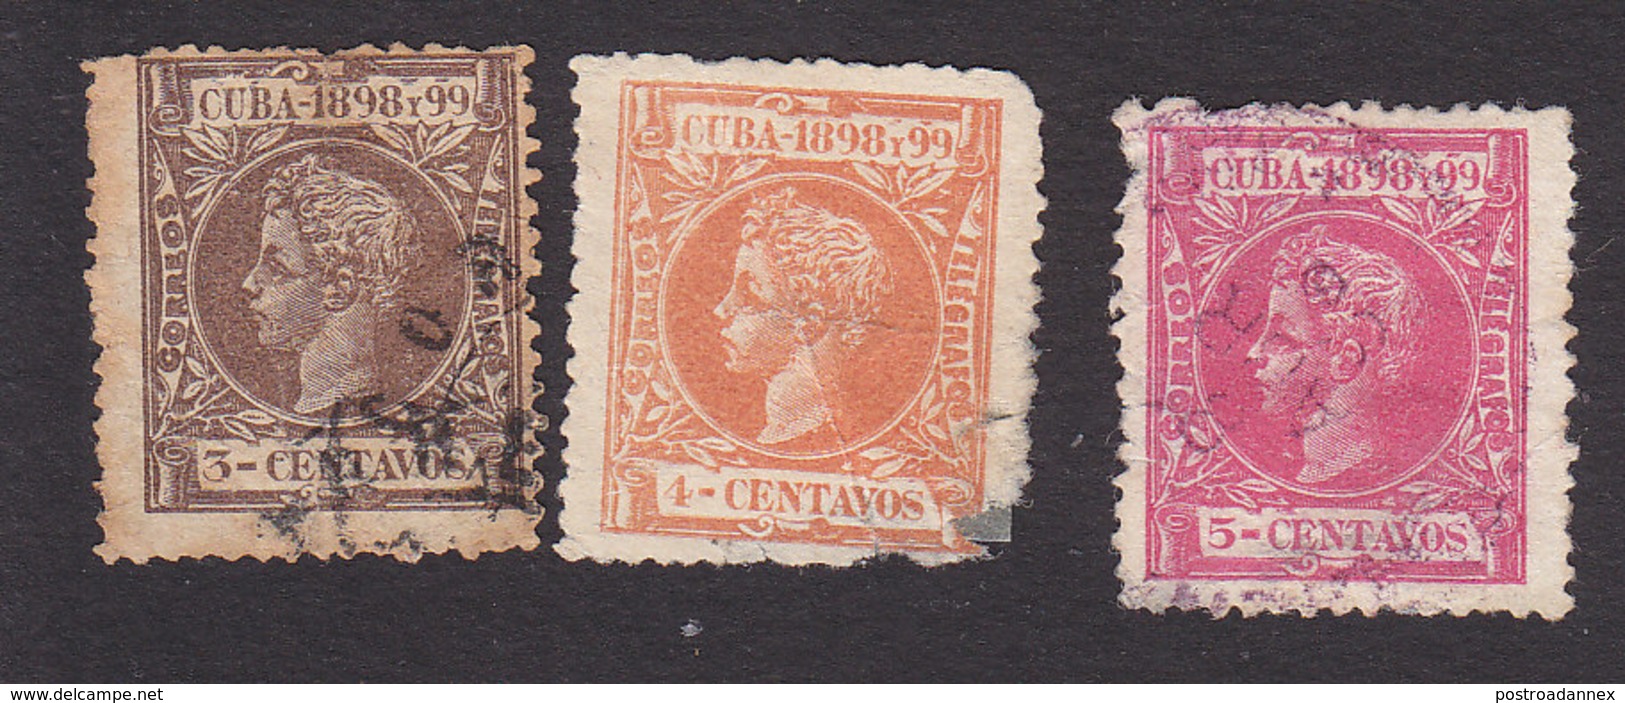 Cuba, Scott #163-165, Used, King Alfonso XIII, Issued 1898 - Cuba (1874-1898)